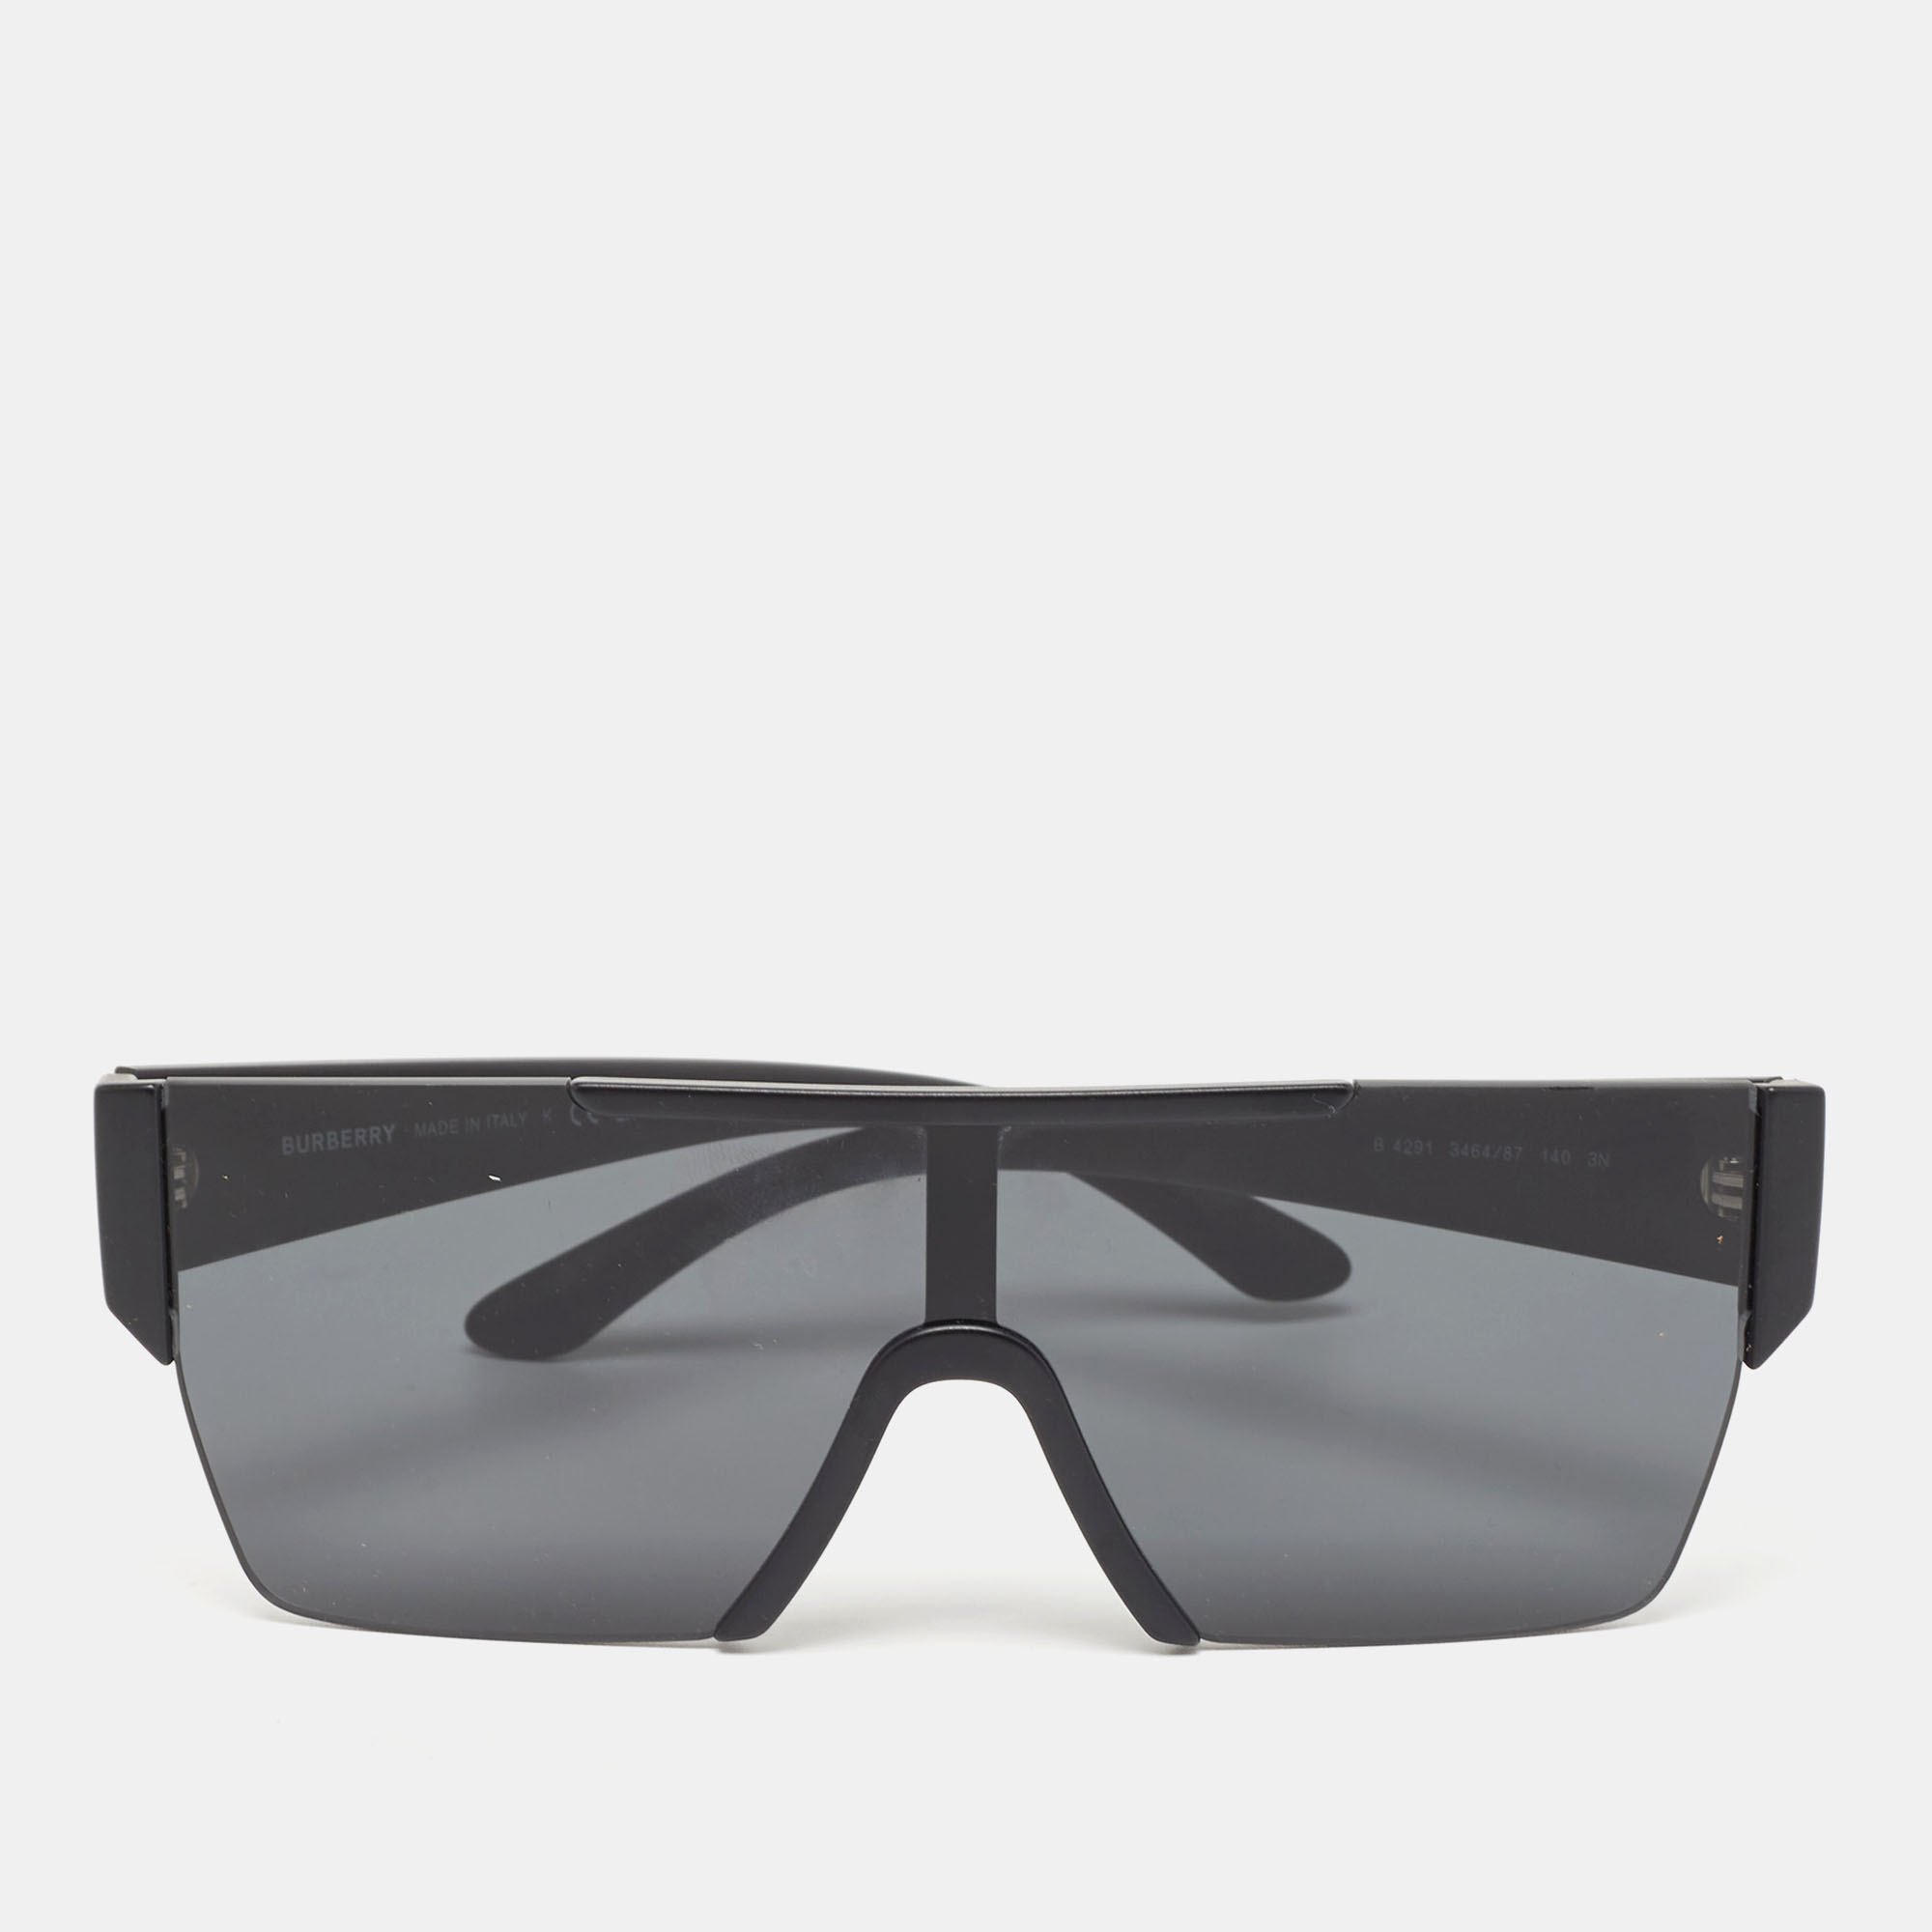 Burberry Black B4291 Shield Sunglasses